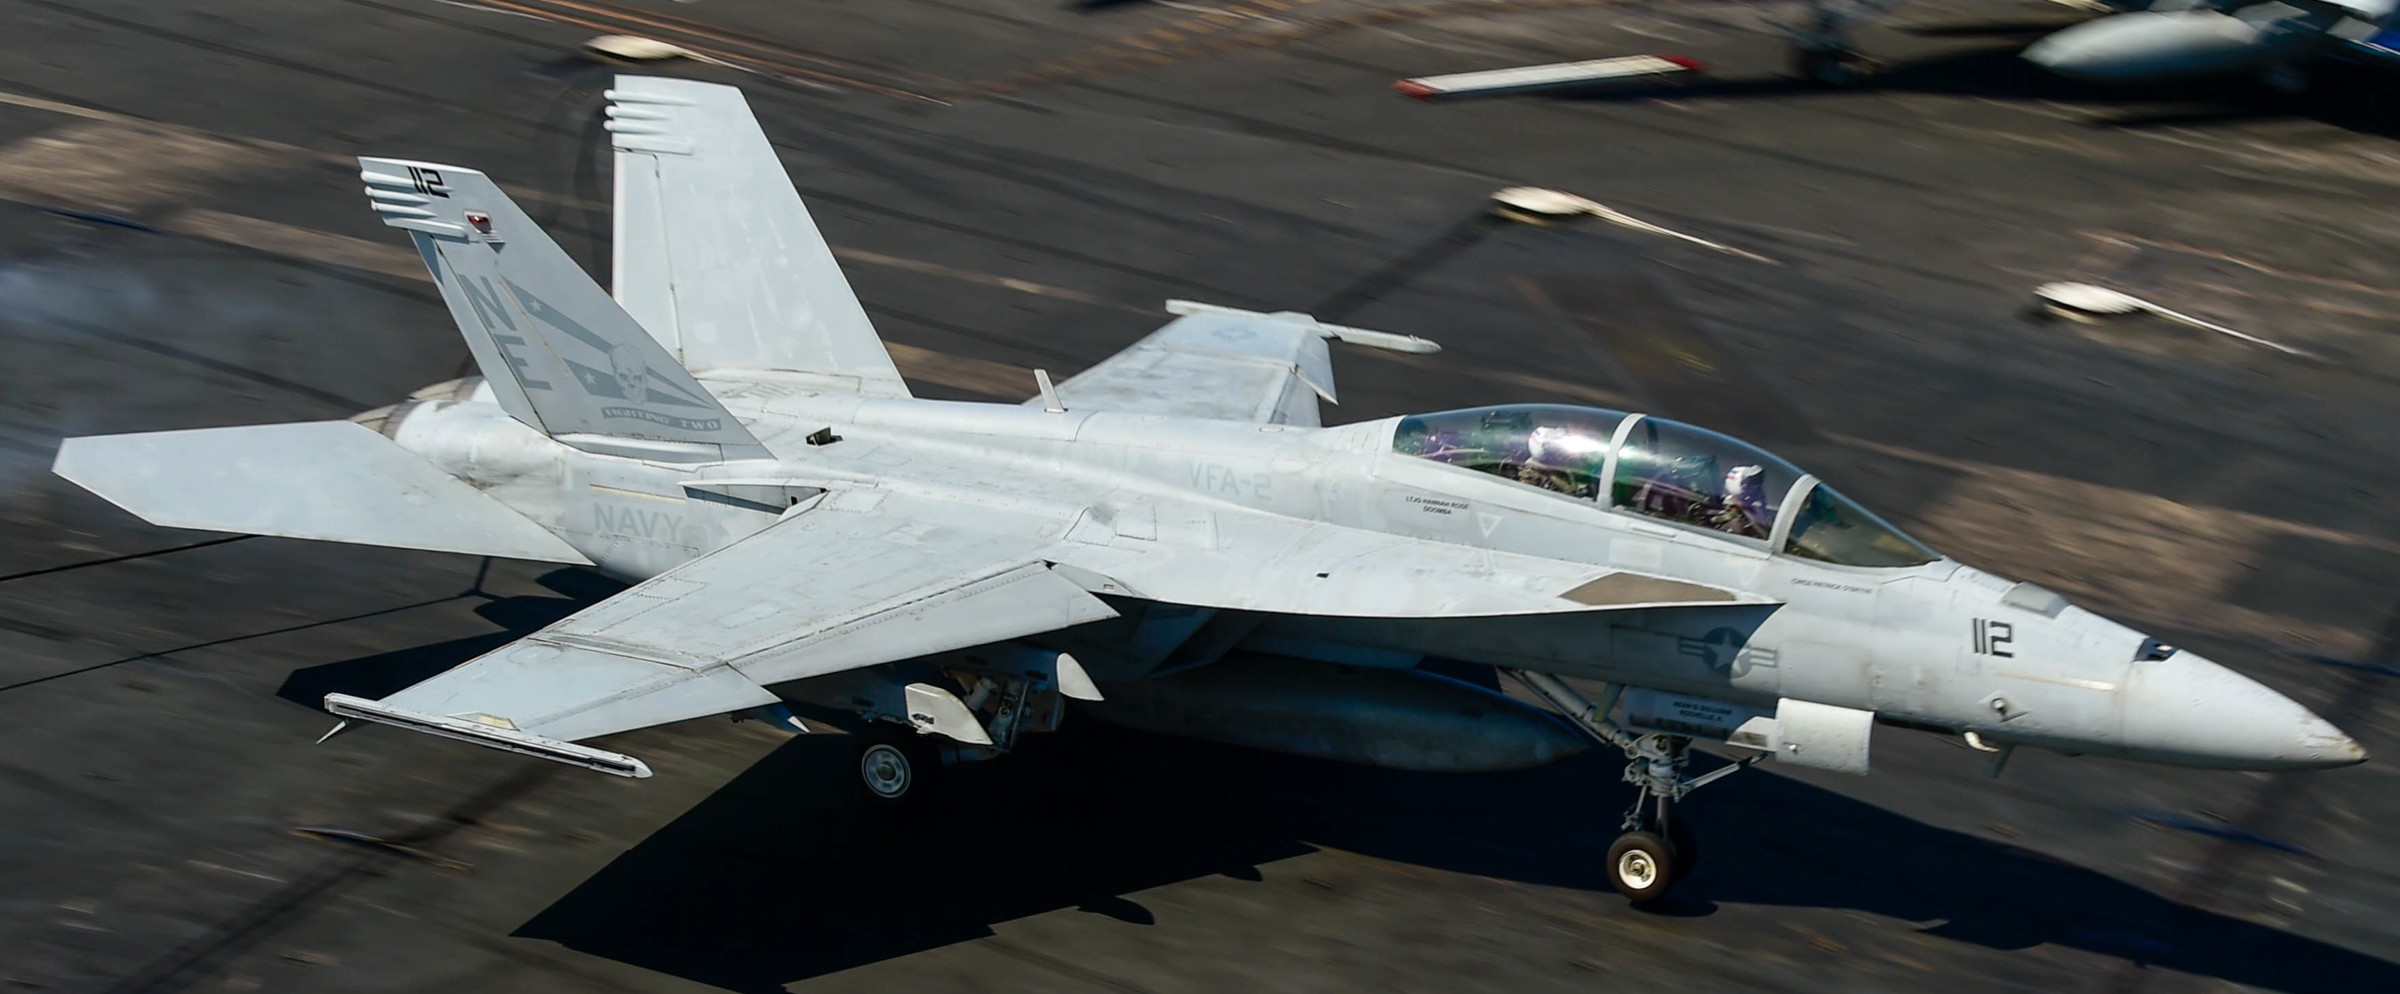 vfa-2 bounty hunters strike fighter squadron us navy f/a-18f super hornet carrier air wing cvw-2 uss carl vinson cvn-70 118